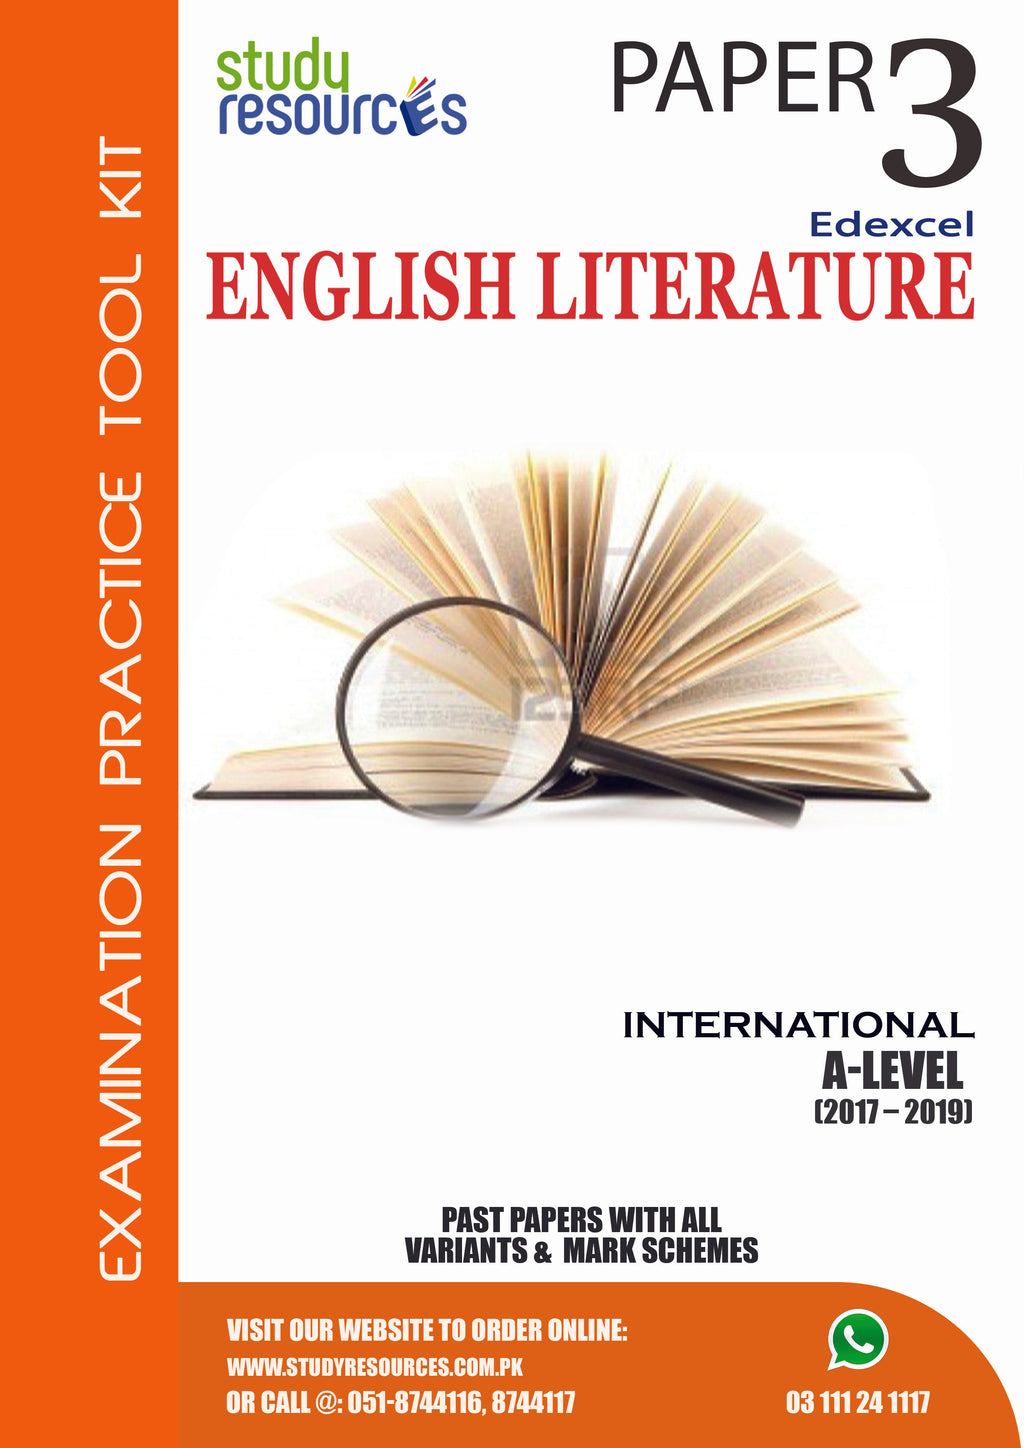 Edexcel A-Level English Literature P-3 Past Papers (2017-2019)